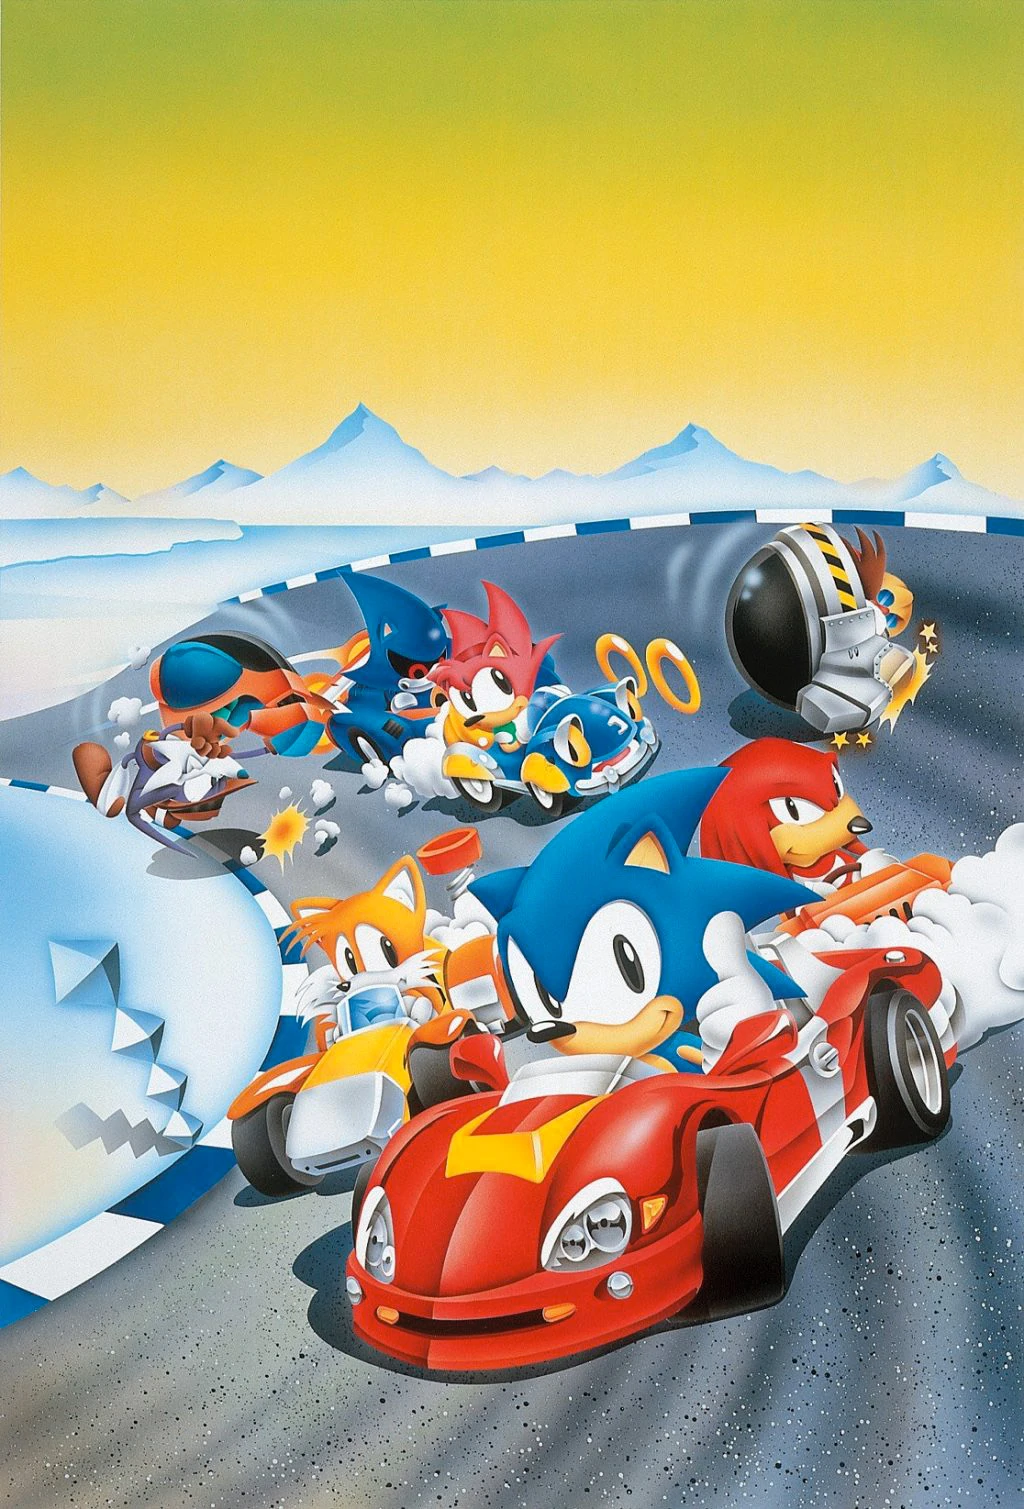 1995  Sonic Drift 2 is released for the Sega Game Gear in Japan.